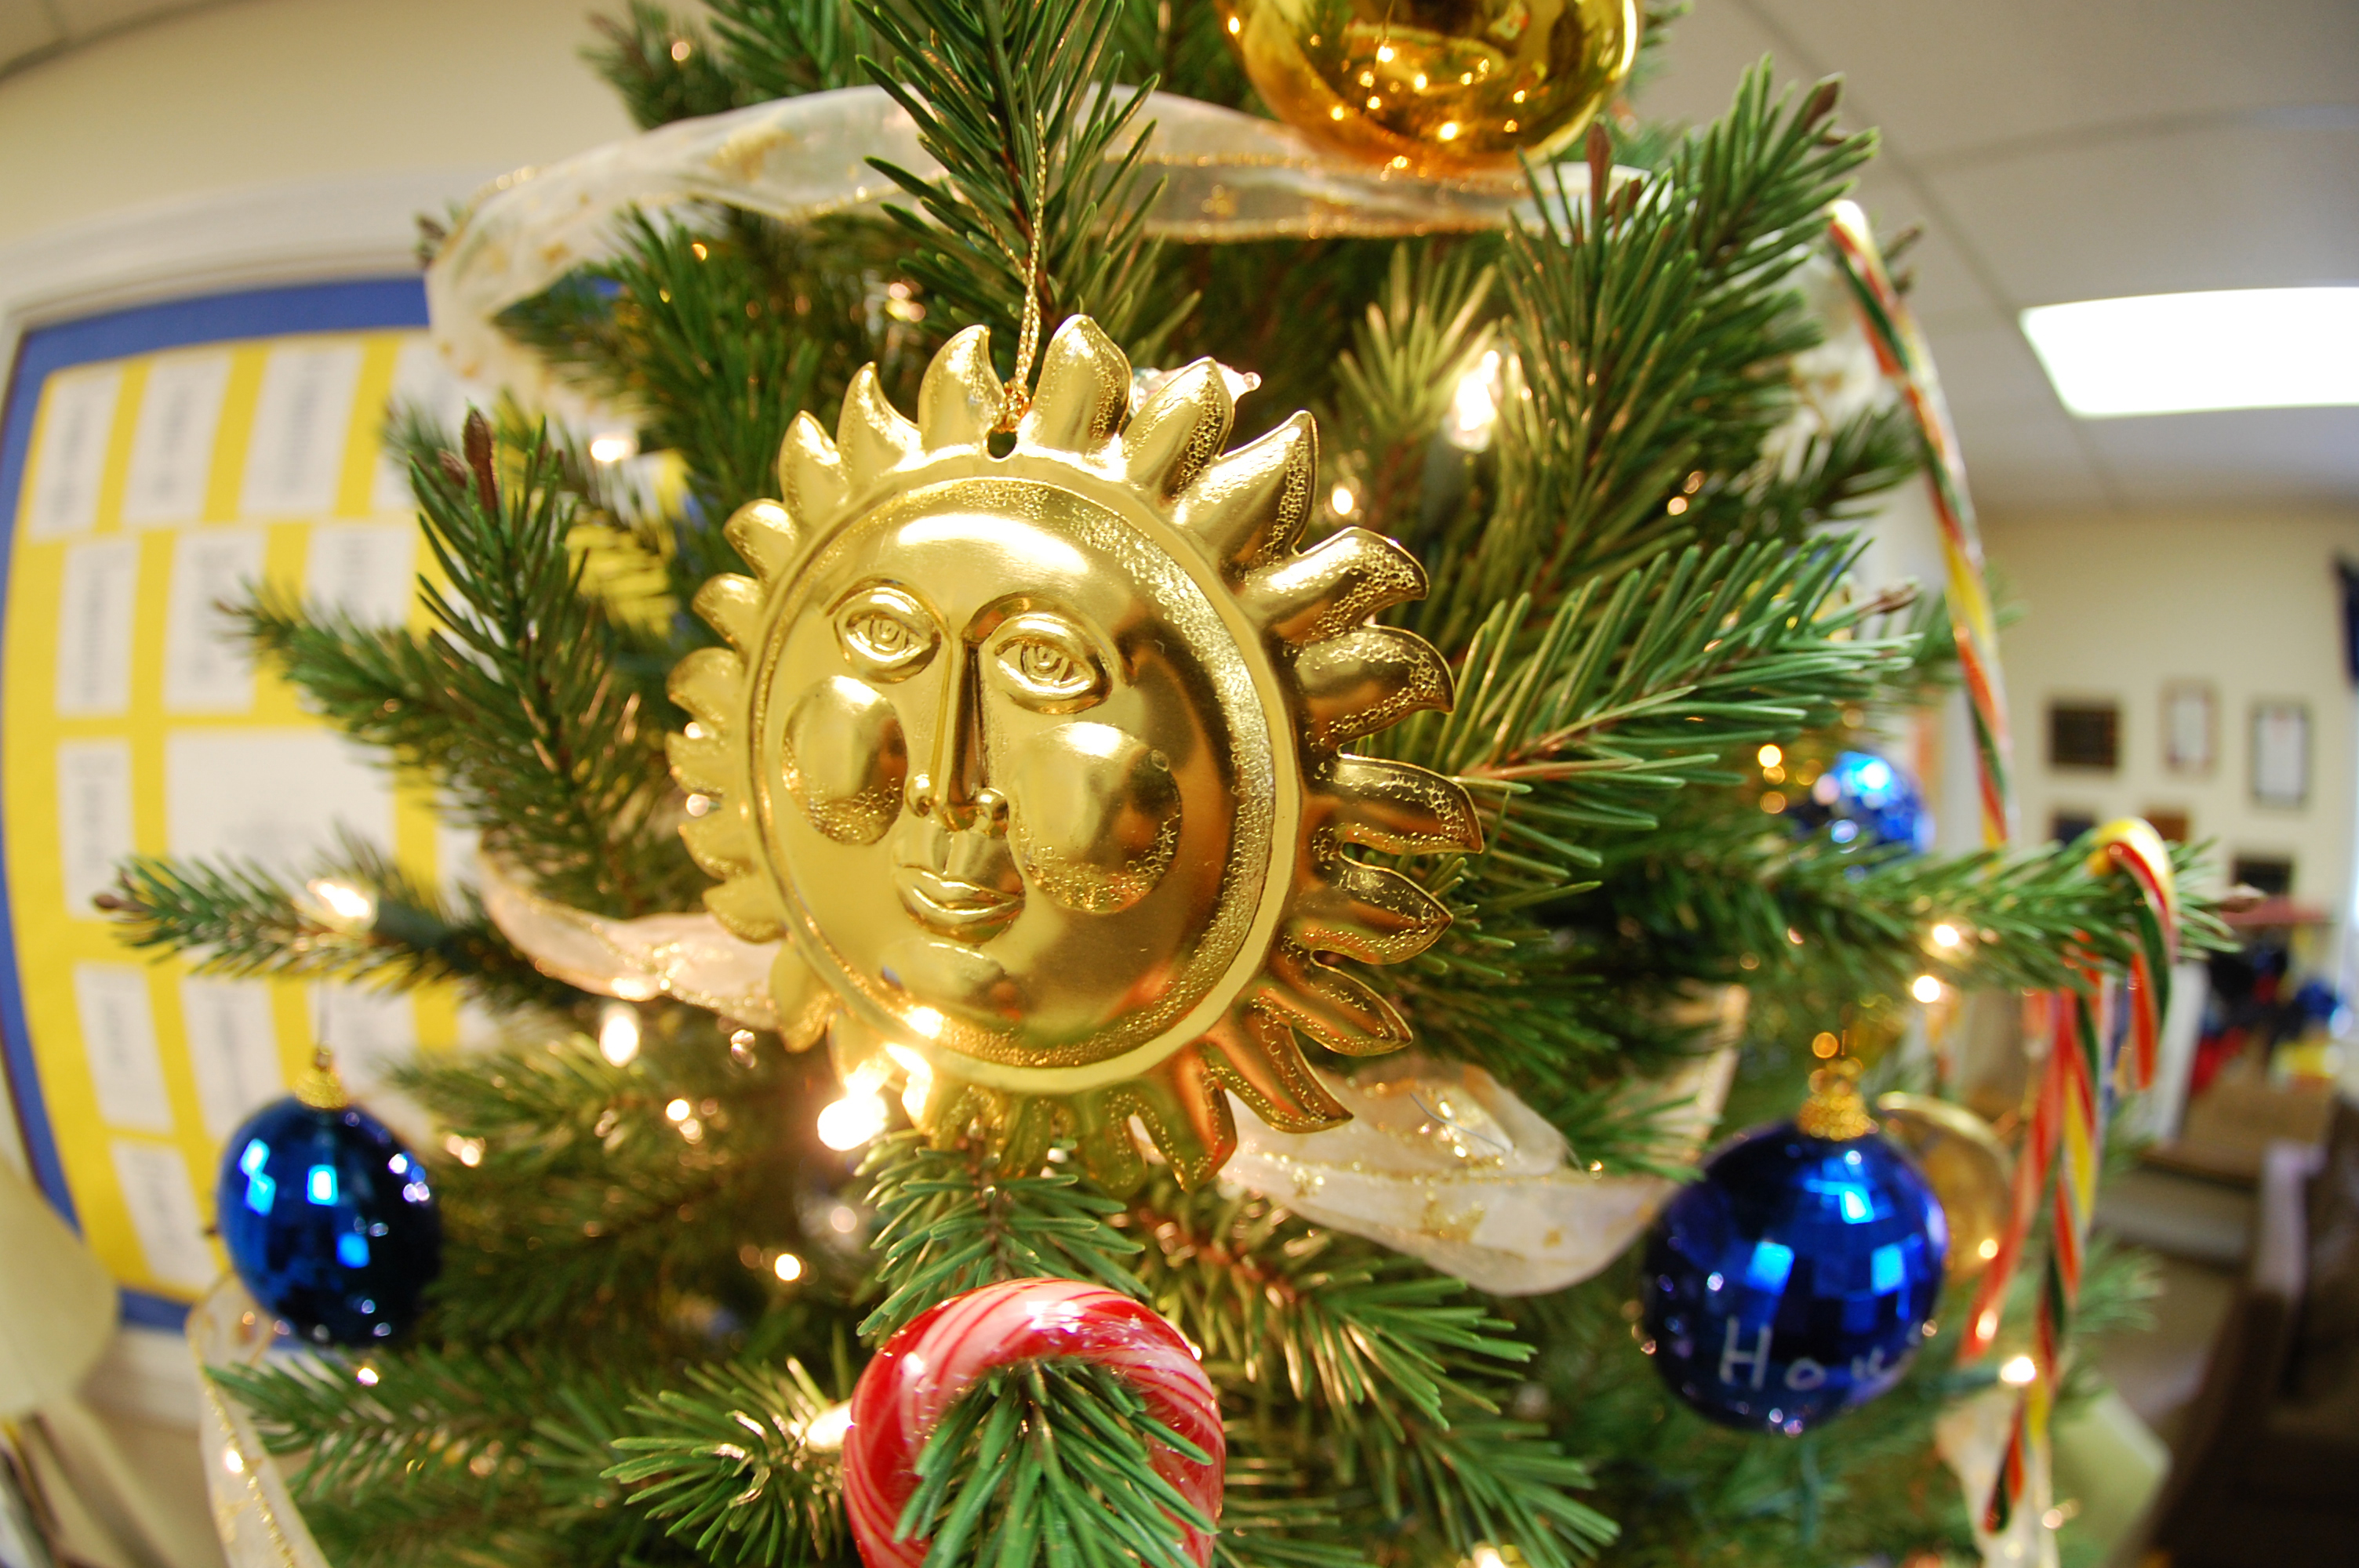 Sun Christmas ornament on a Christmas tree